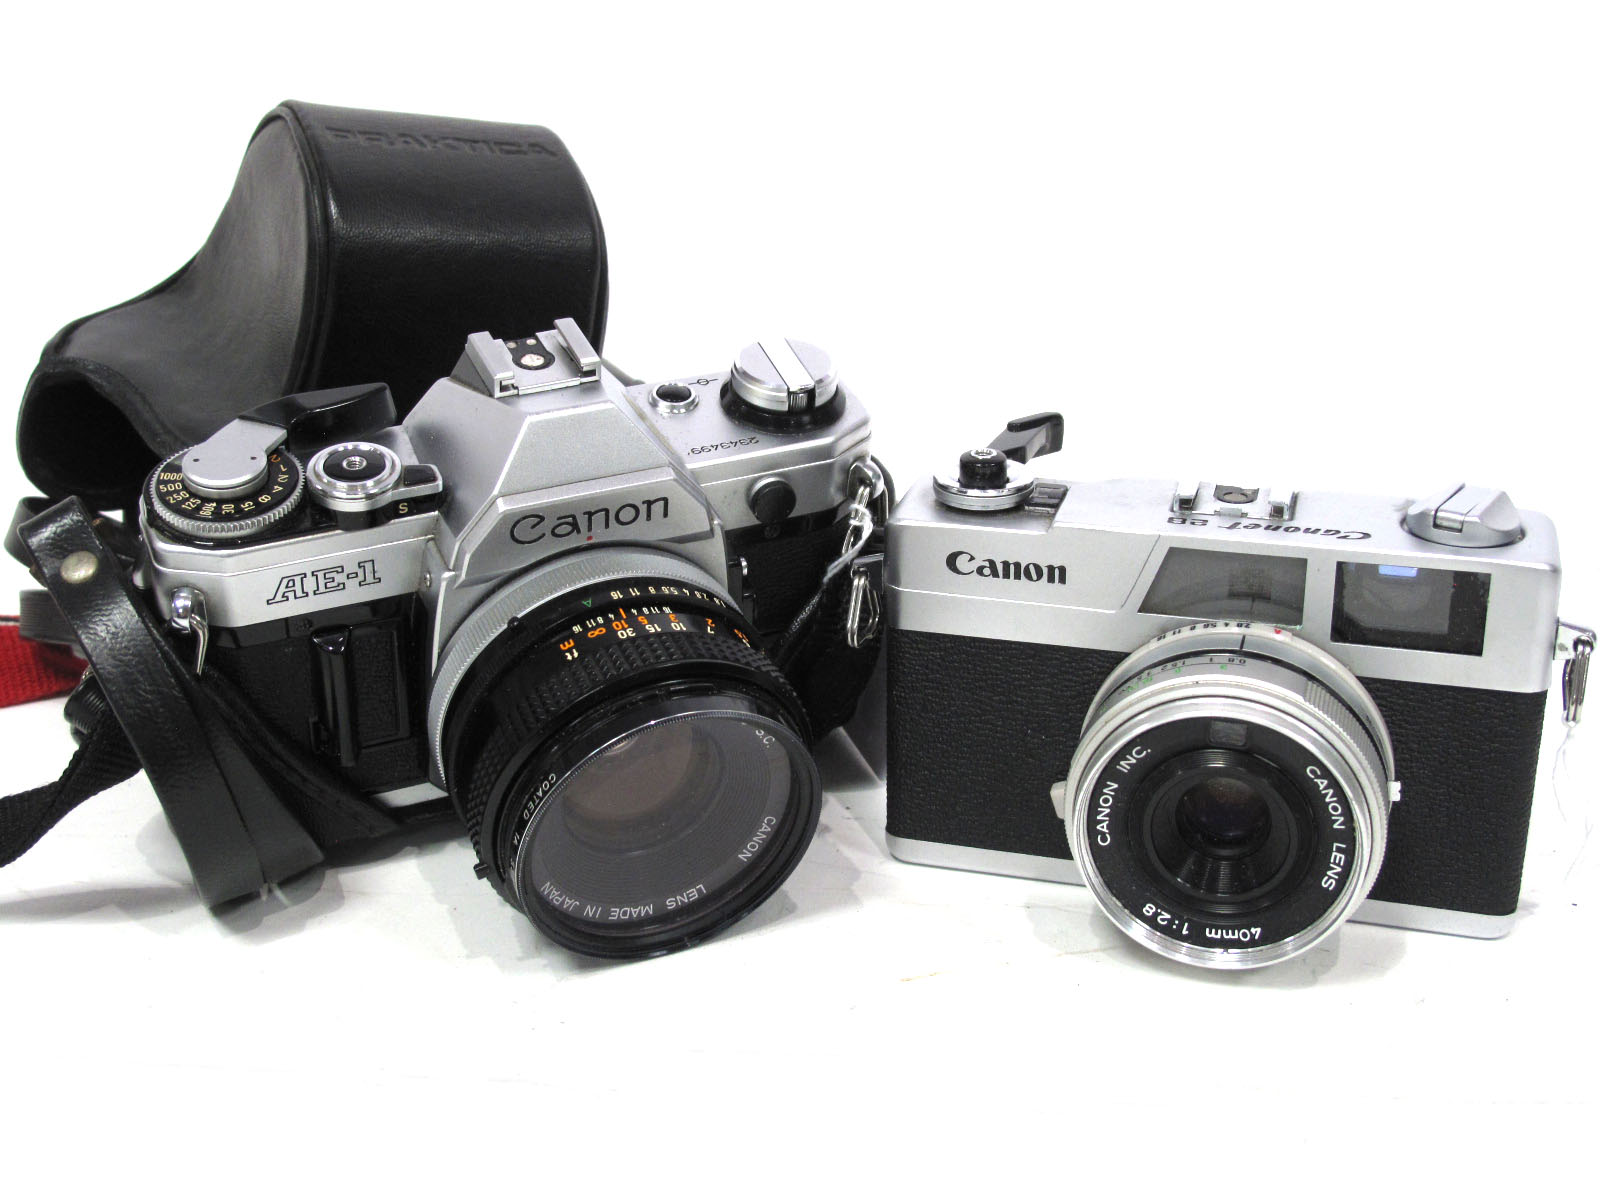 Canon AE-1, with canon FD 50mm lens, also Canon Canonet 28 Canon lens 40mm. (2)